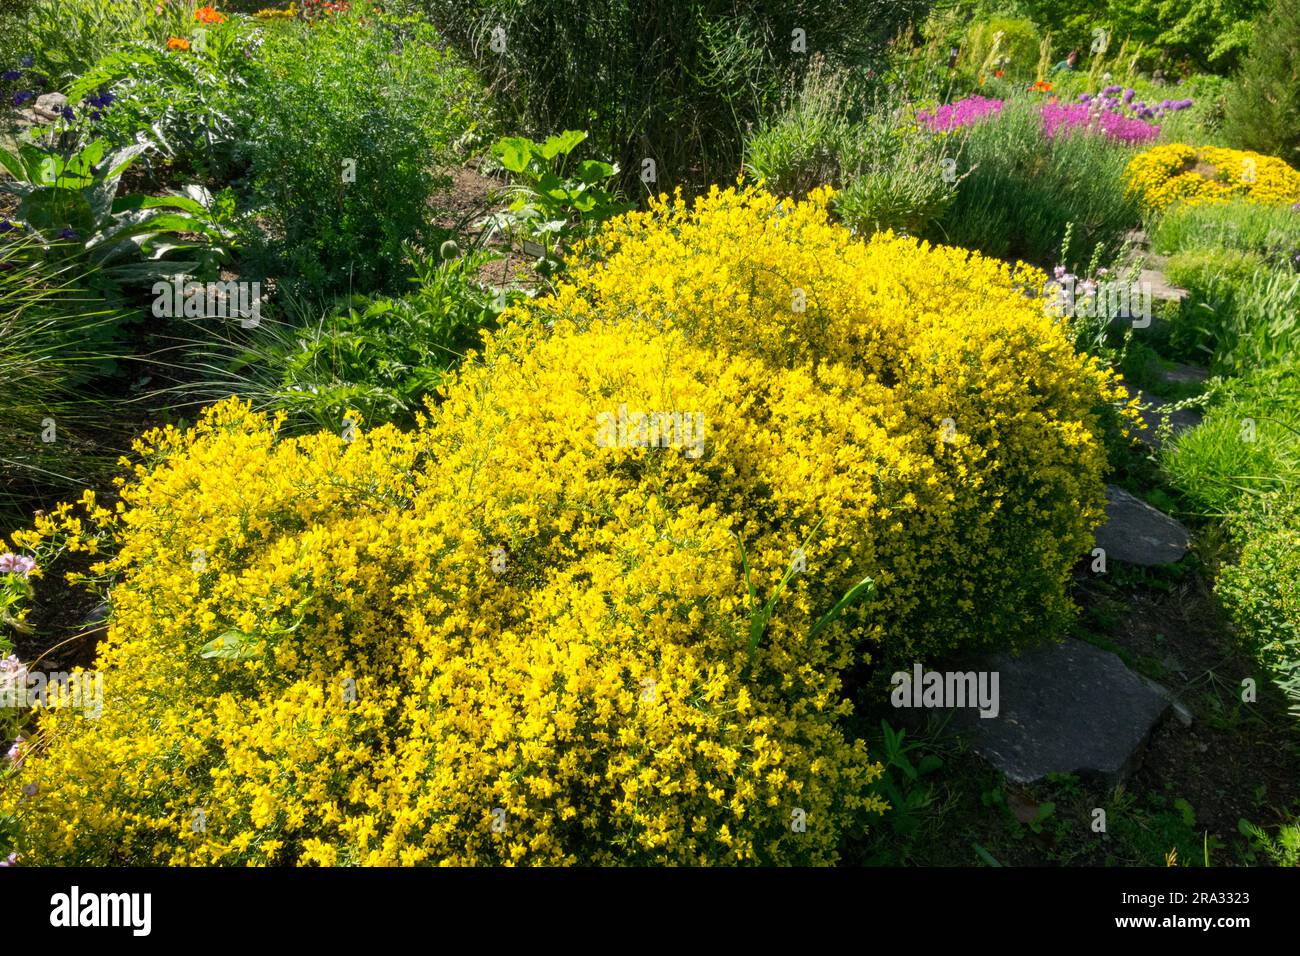 Yellow, Genista lydia, Garden Lydian Broom, Genista garden yellow low prostrate shrub Stock Photo